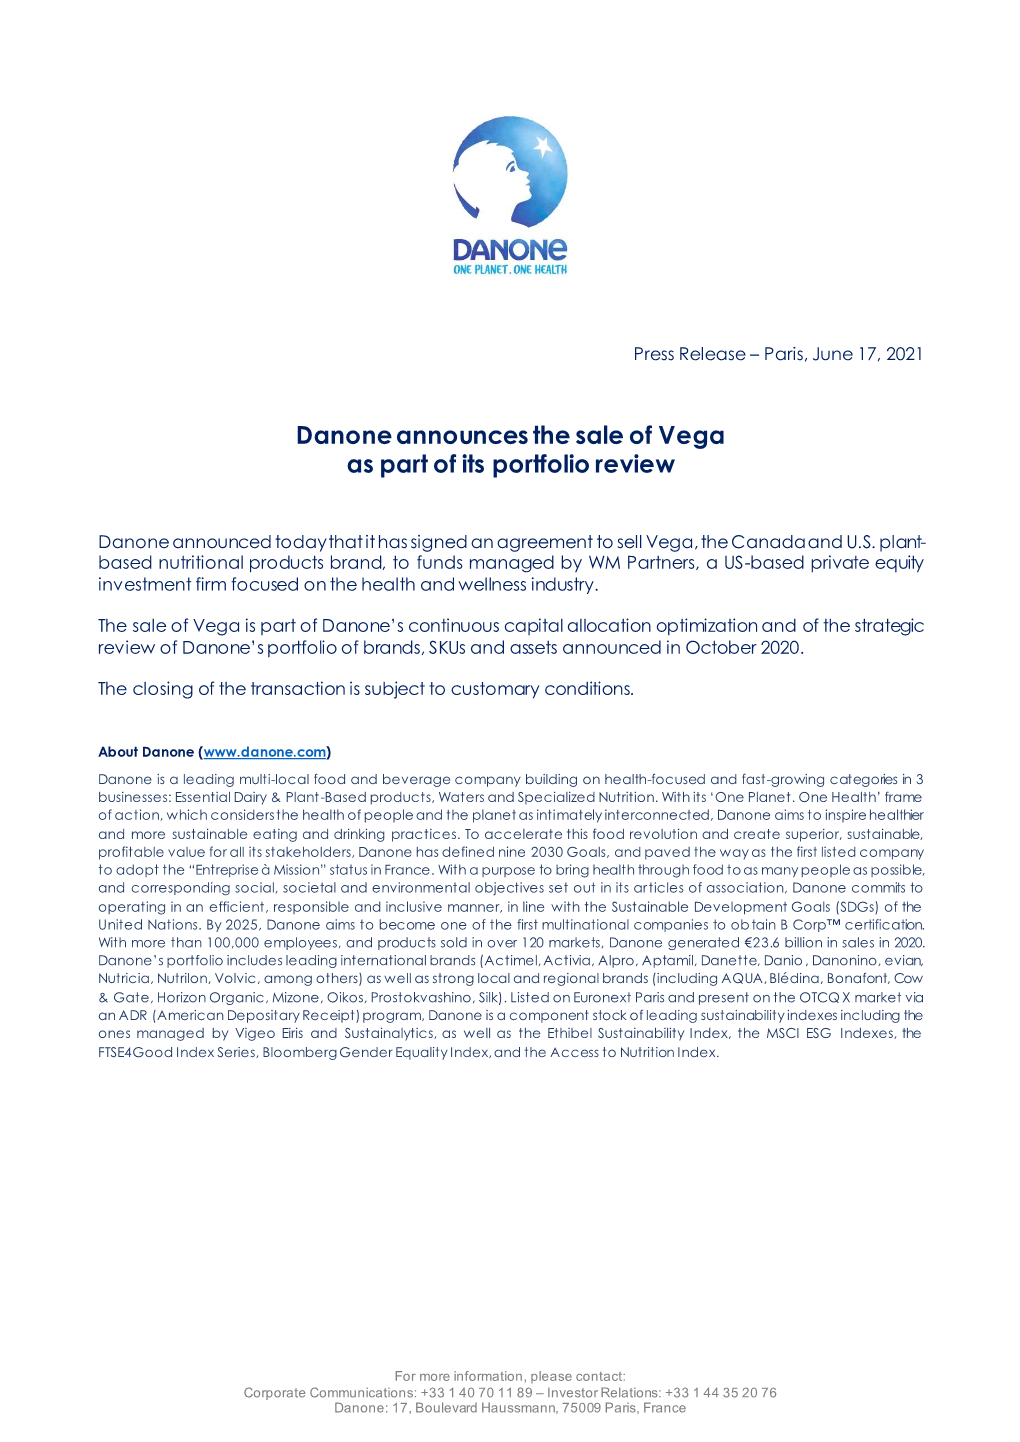 Danone Announces the Sale of Vega As Part of Its Portfolio Review